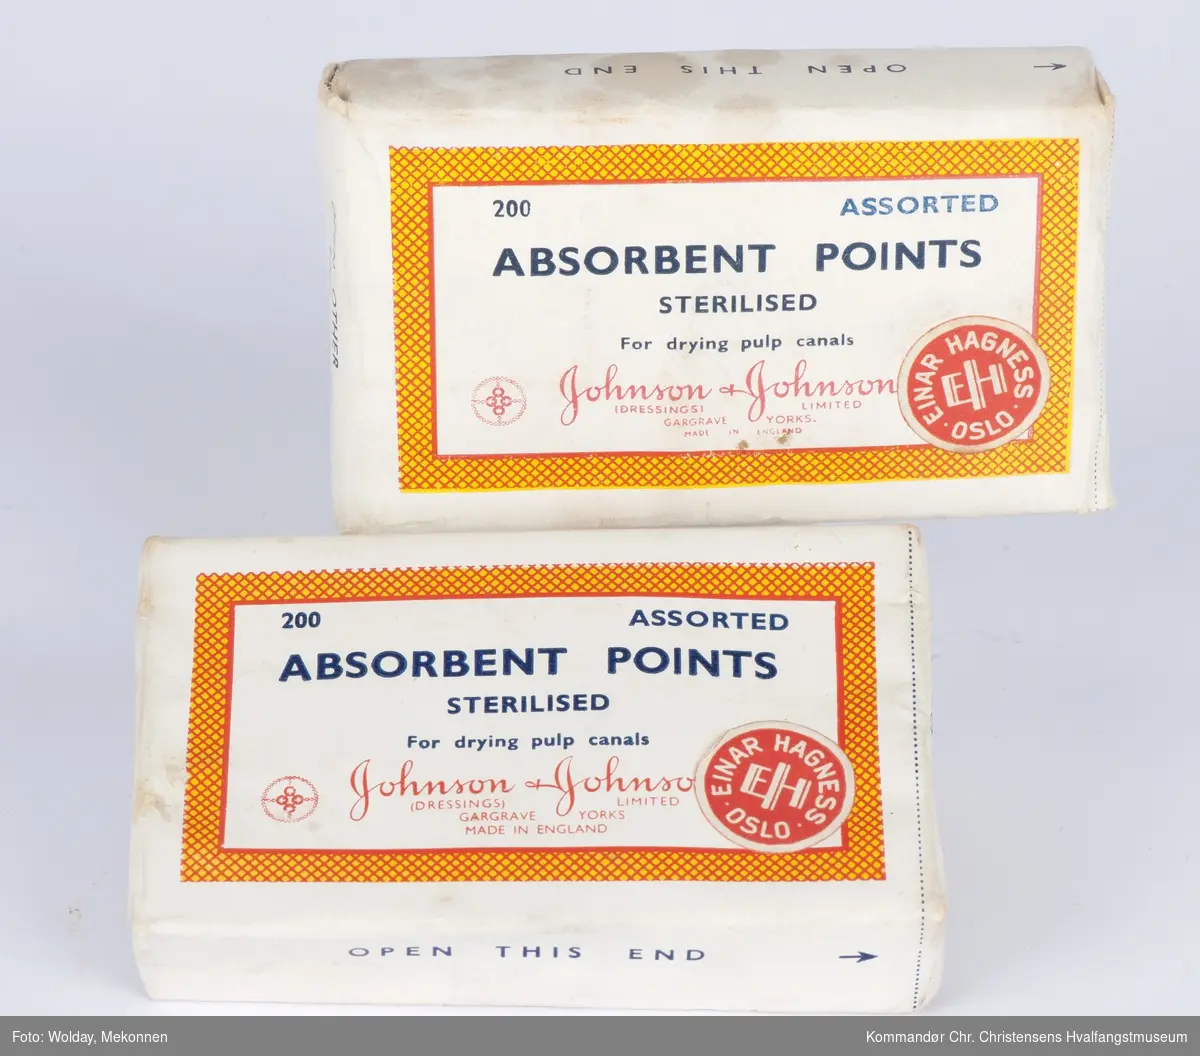 Pakke med Absorbent Points for daring pulp canals (bomullspinner ?) Forseglet, uåpnet eske.